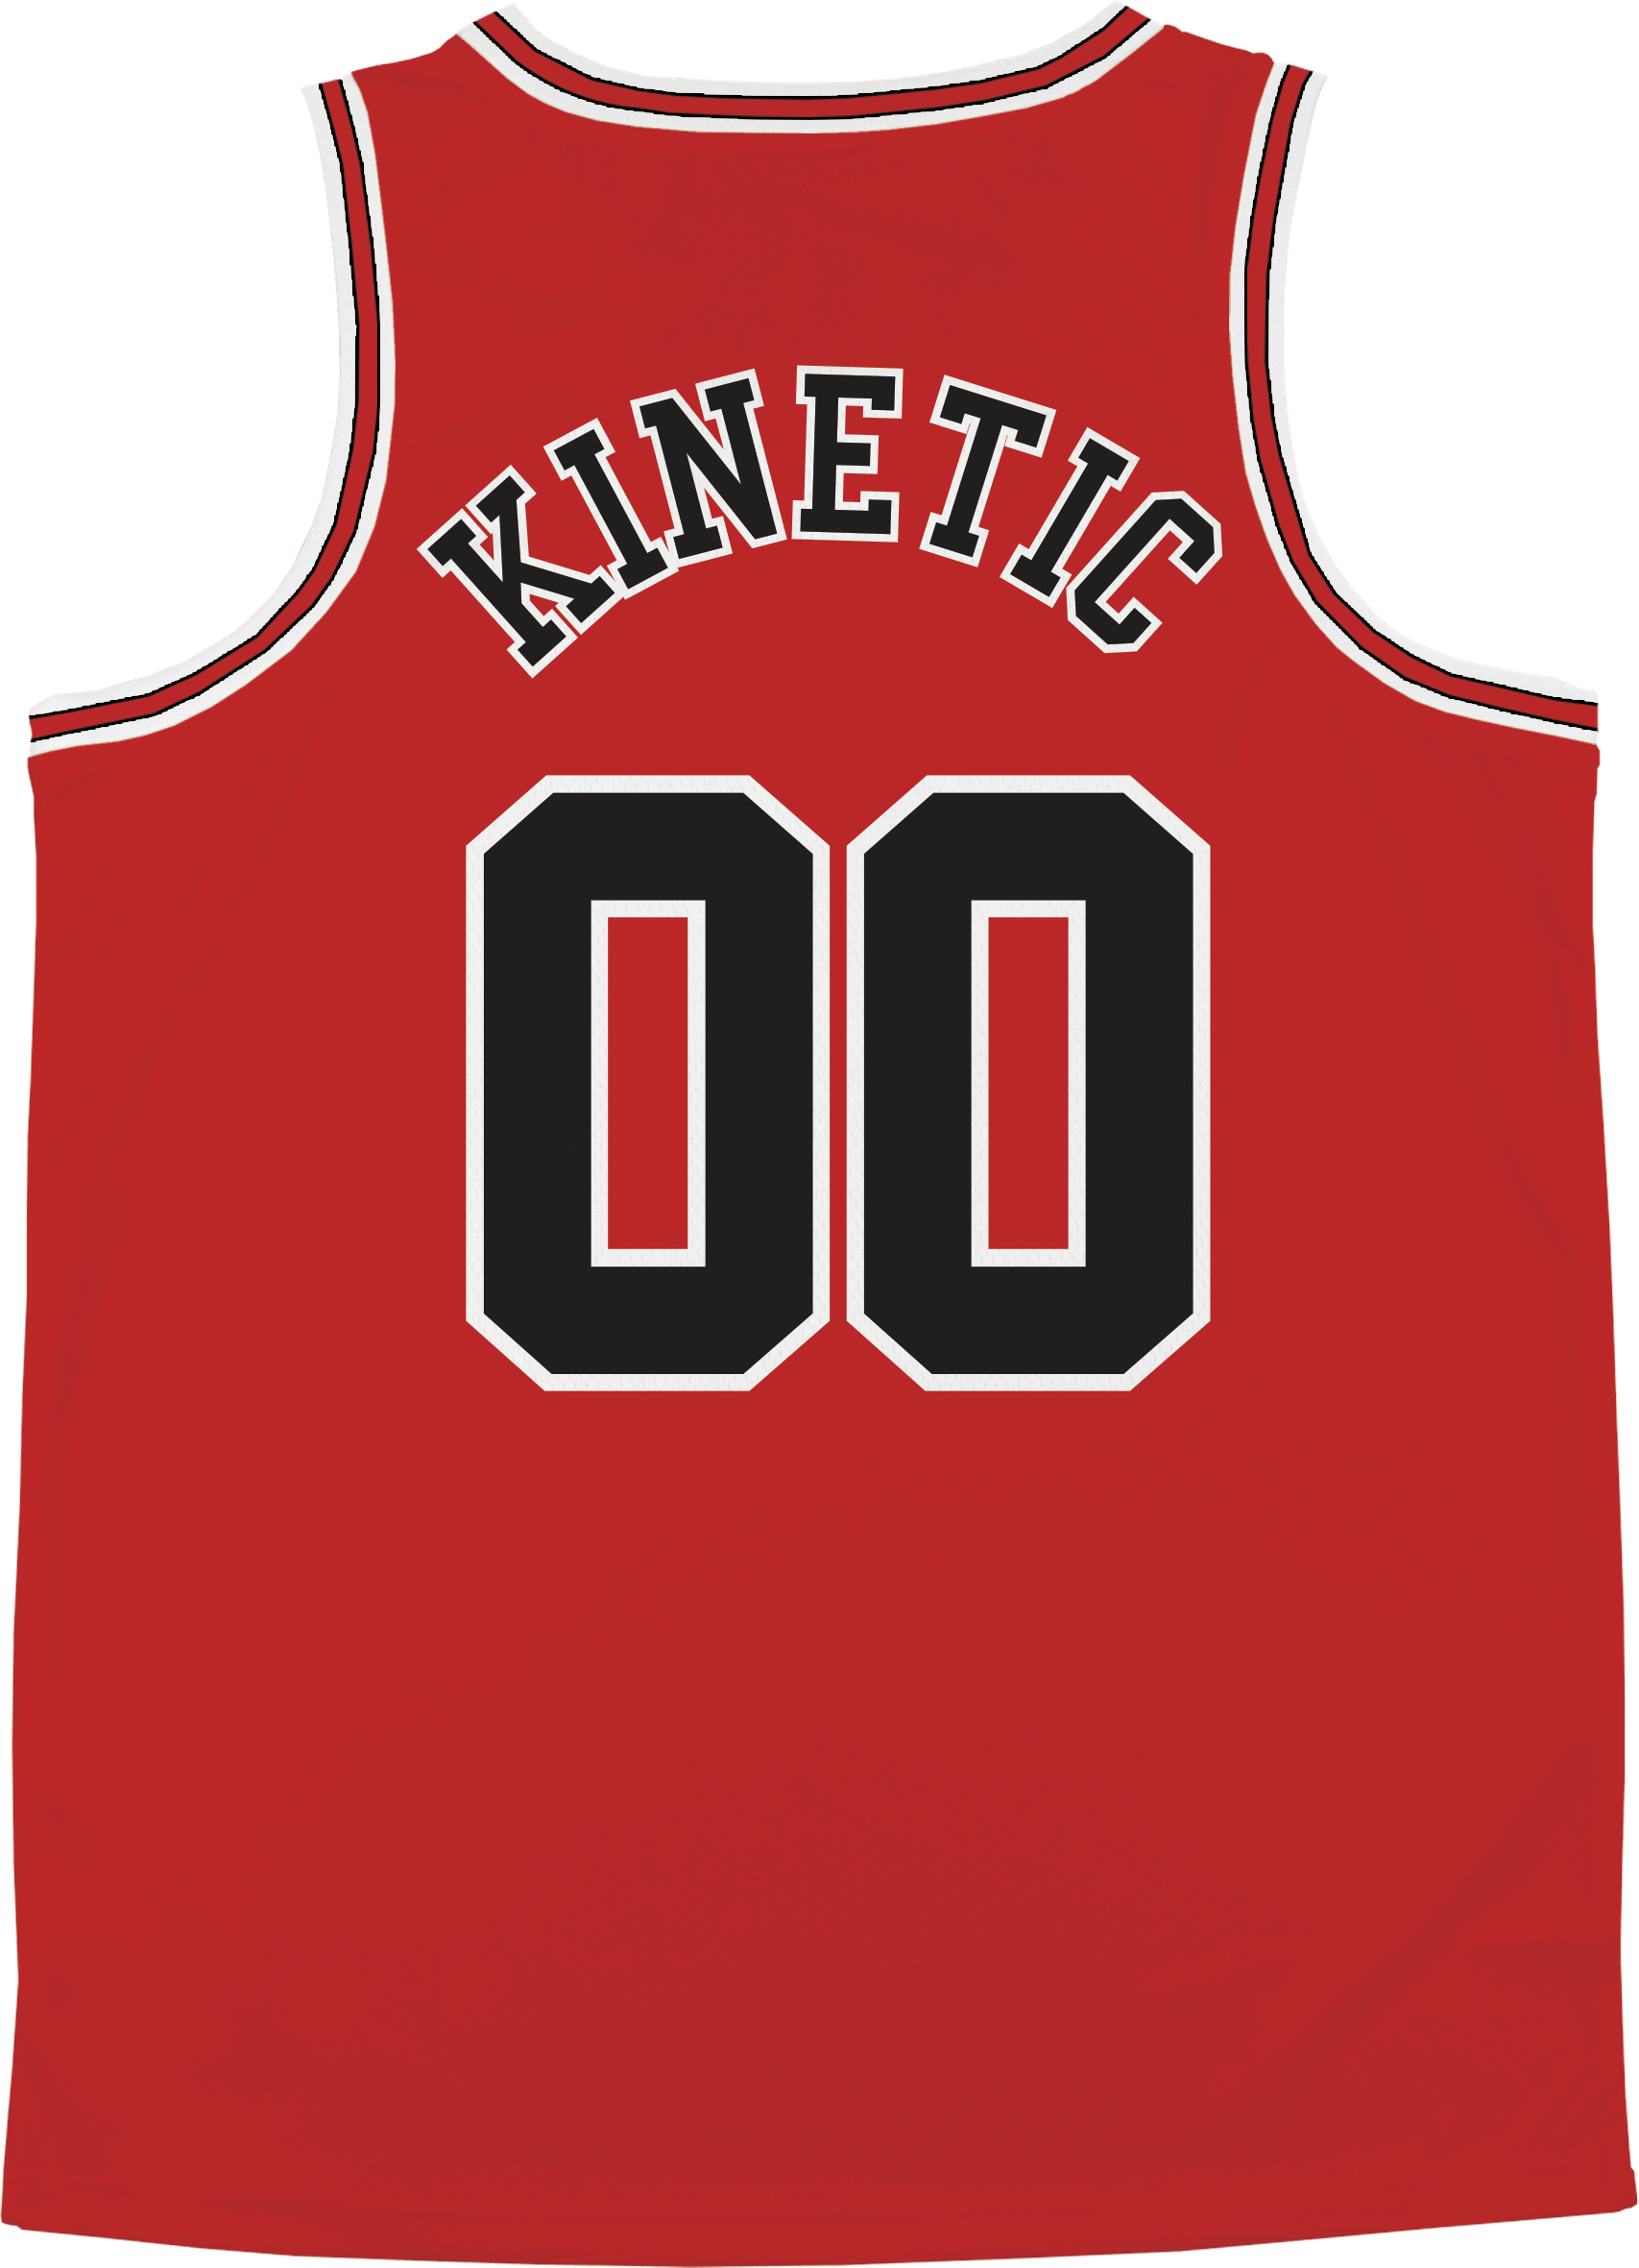 Lambda Phi Epsilon - Big Red Basketball Jersey - Kinetic Society